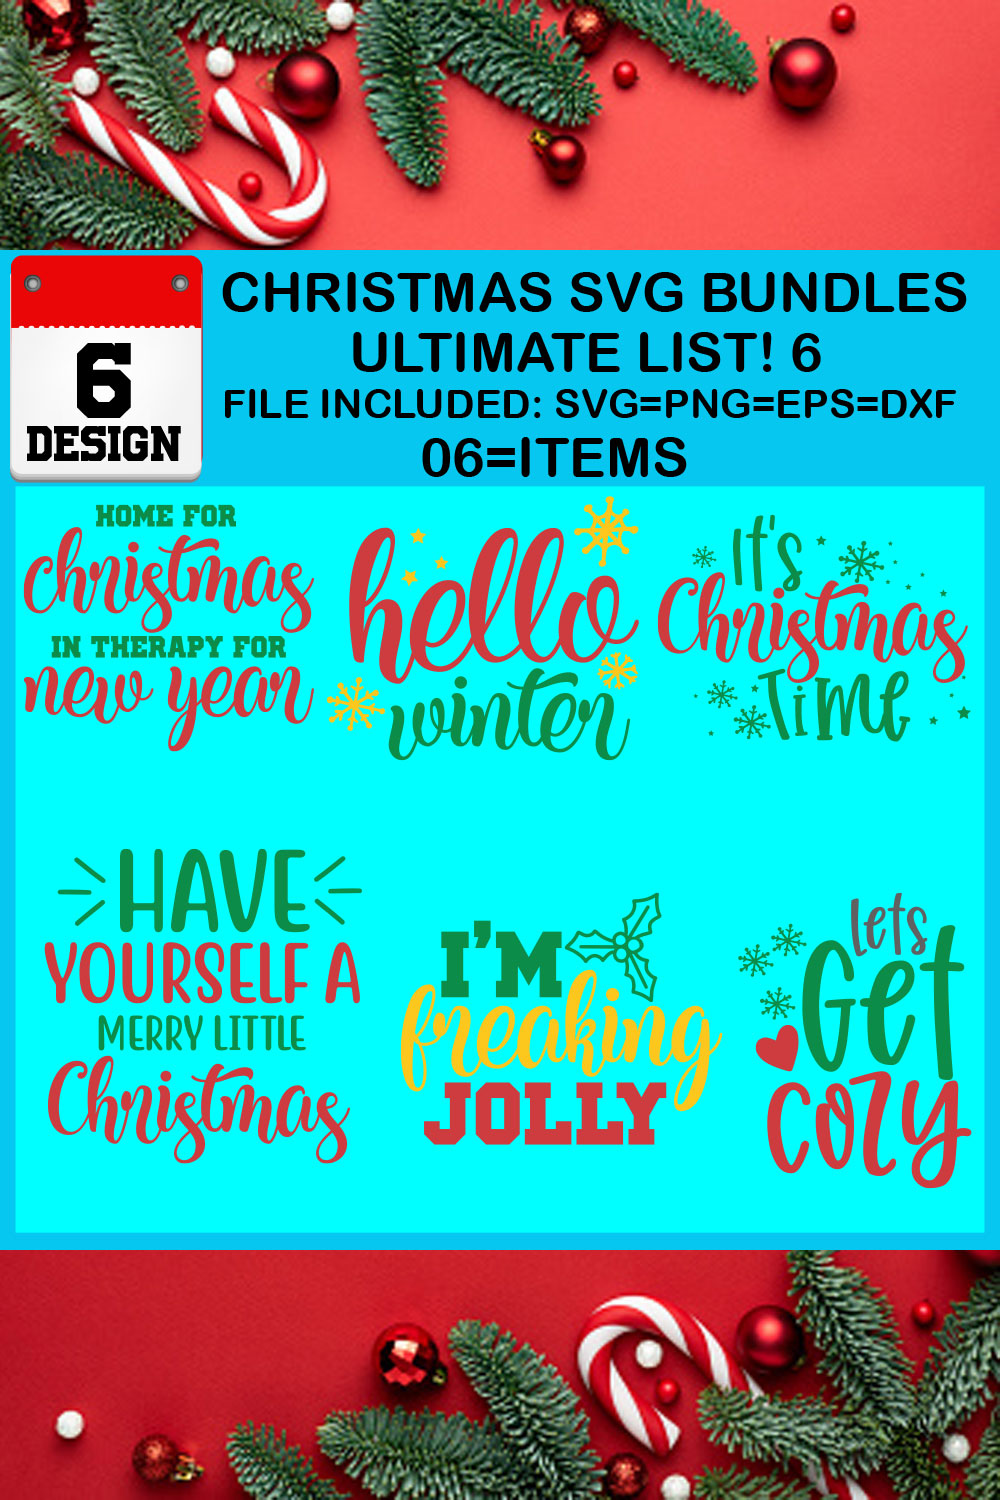 Christmas T-shirt SVG Design Bundles Ultimate List 6 Files pinterest preview image.